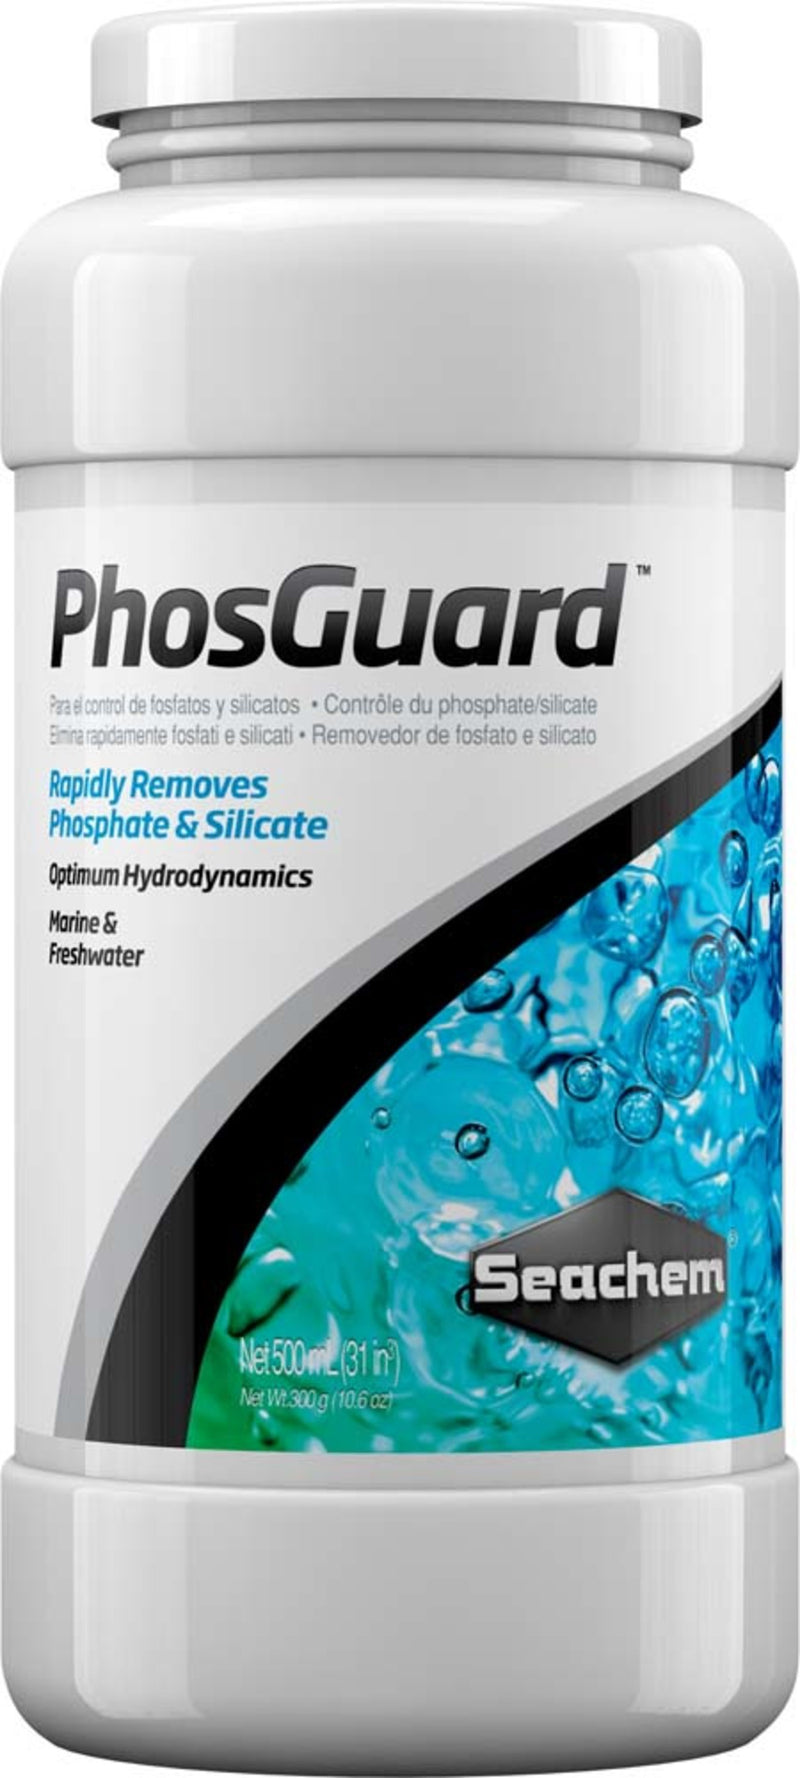 Seachem PhosGuard Phosphate and Silicate Remover